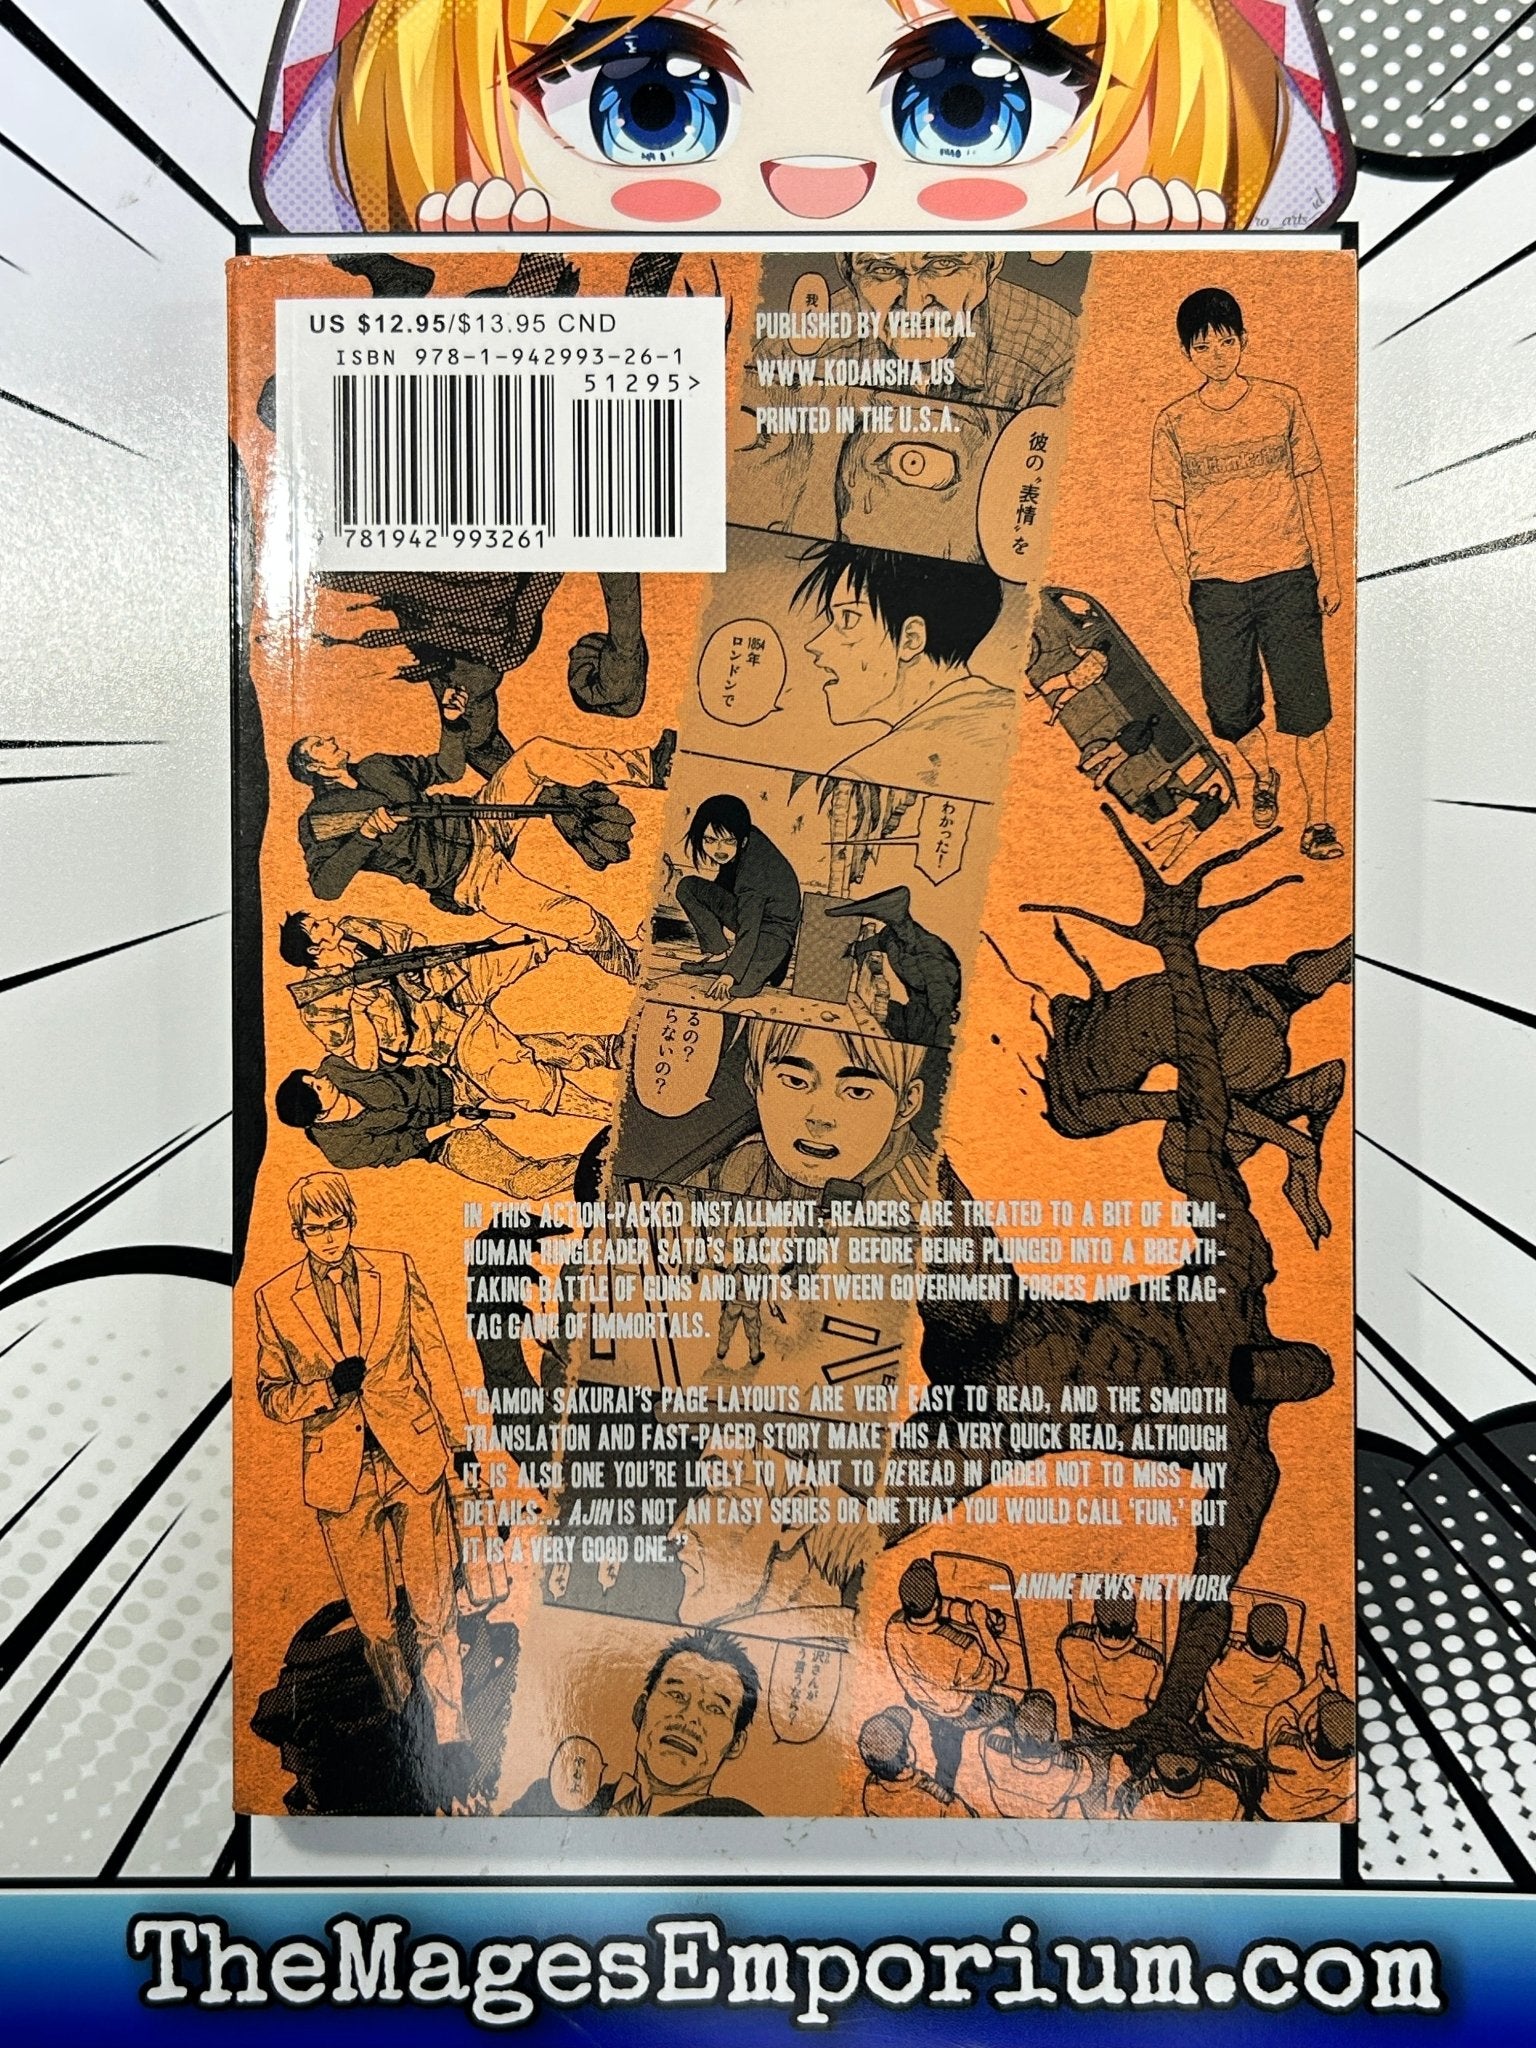 Gamon Sakurai's Ajin: Demi-Human Manga Ends - News - Anime News Network